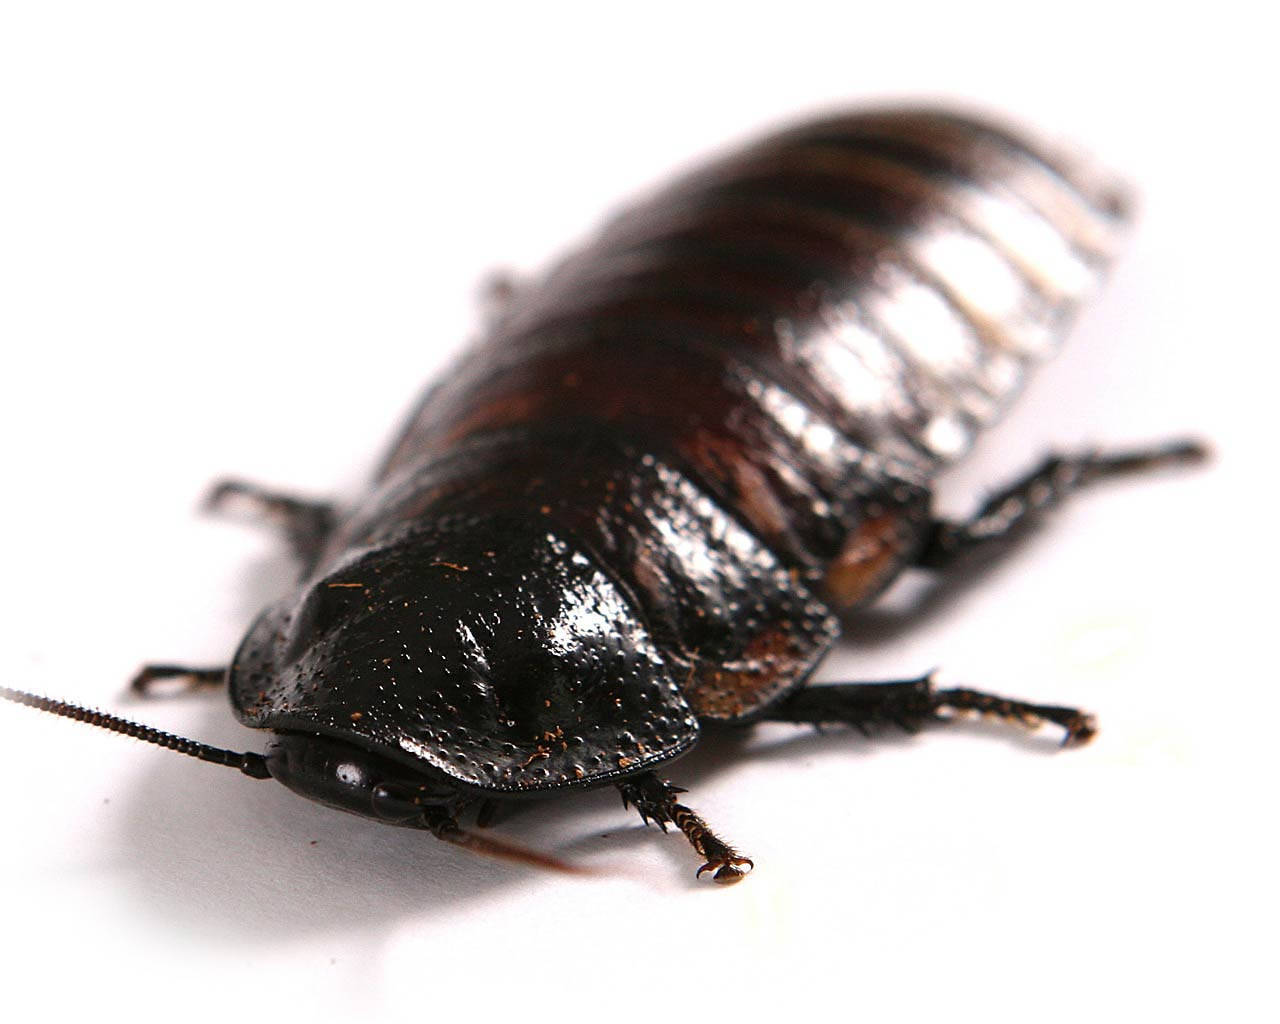 Caption: Close-up view of a Big Black Oriental Cockroach Wallpaper